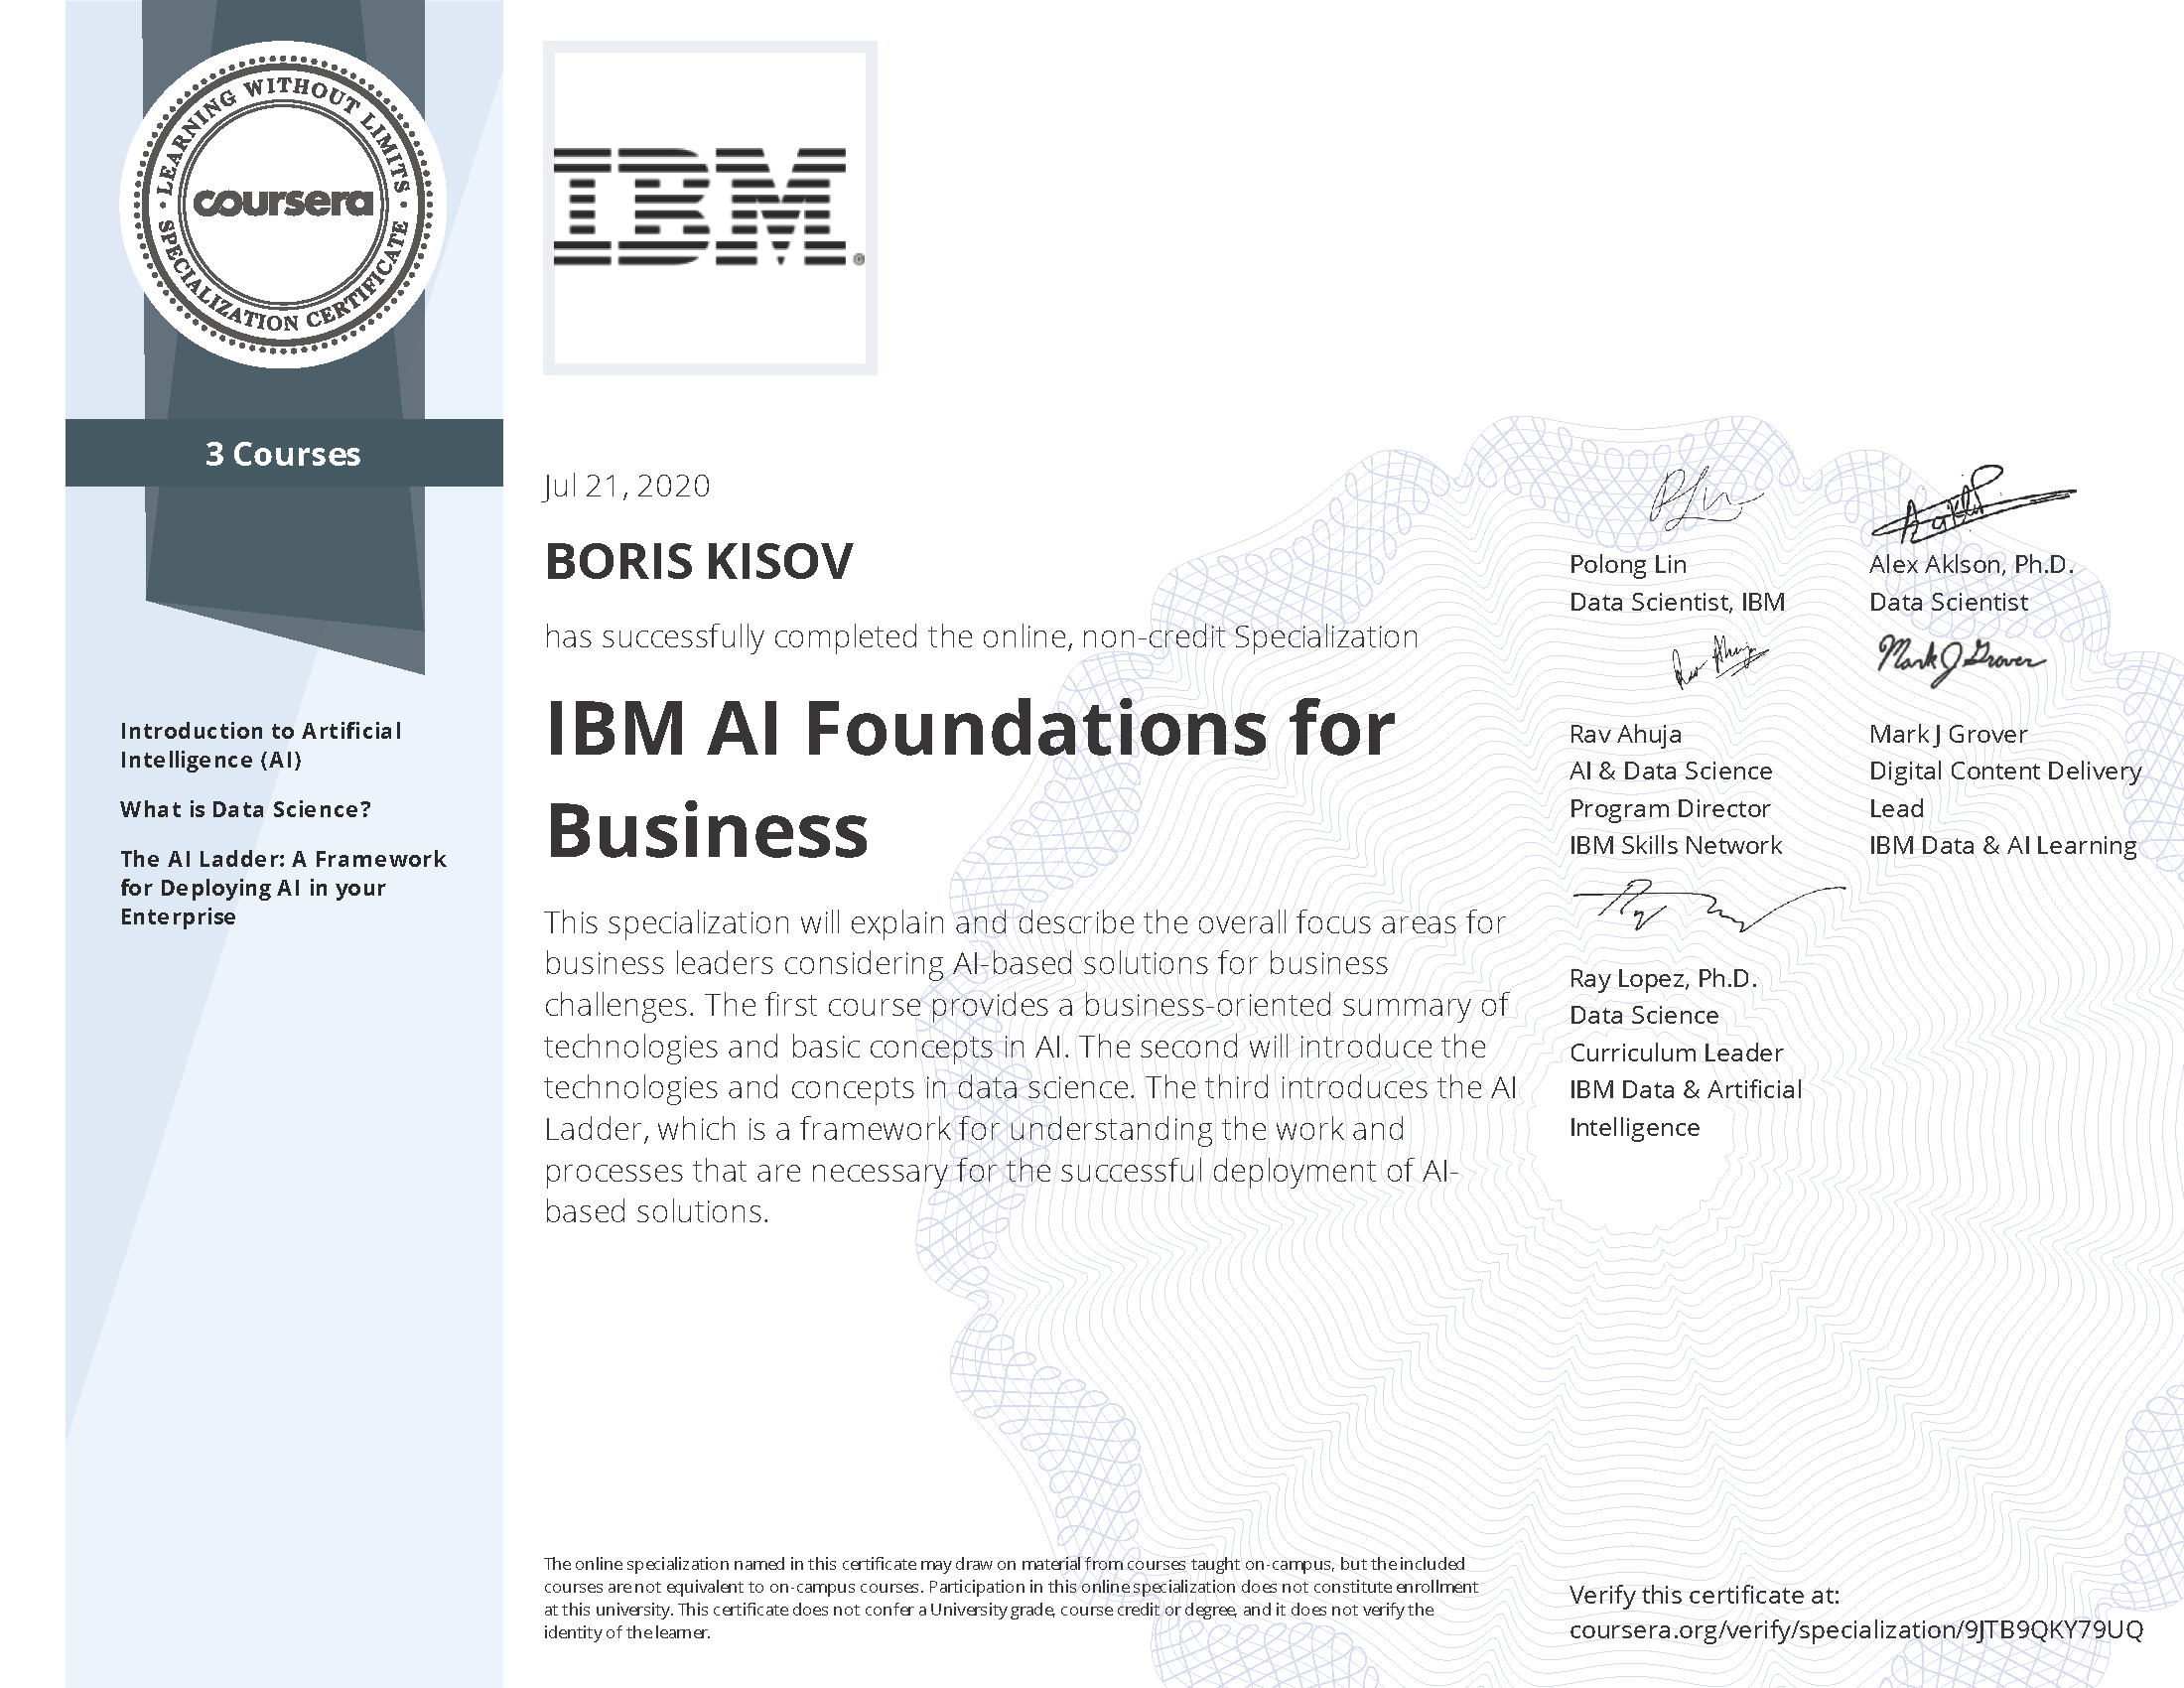 IBM AI Foundations for Business